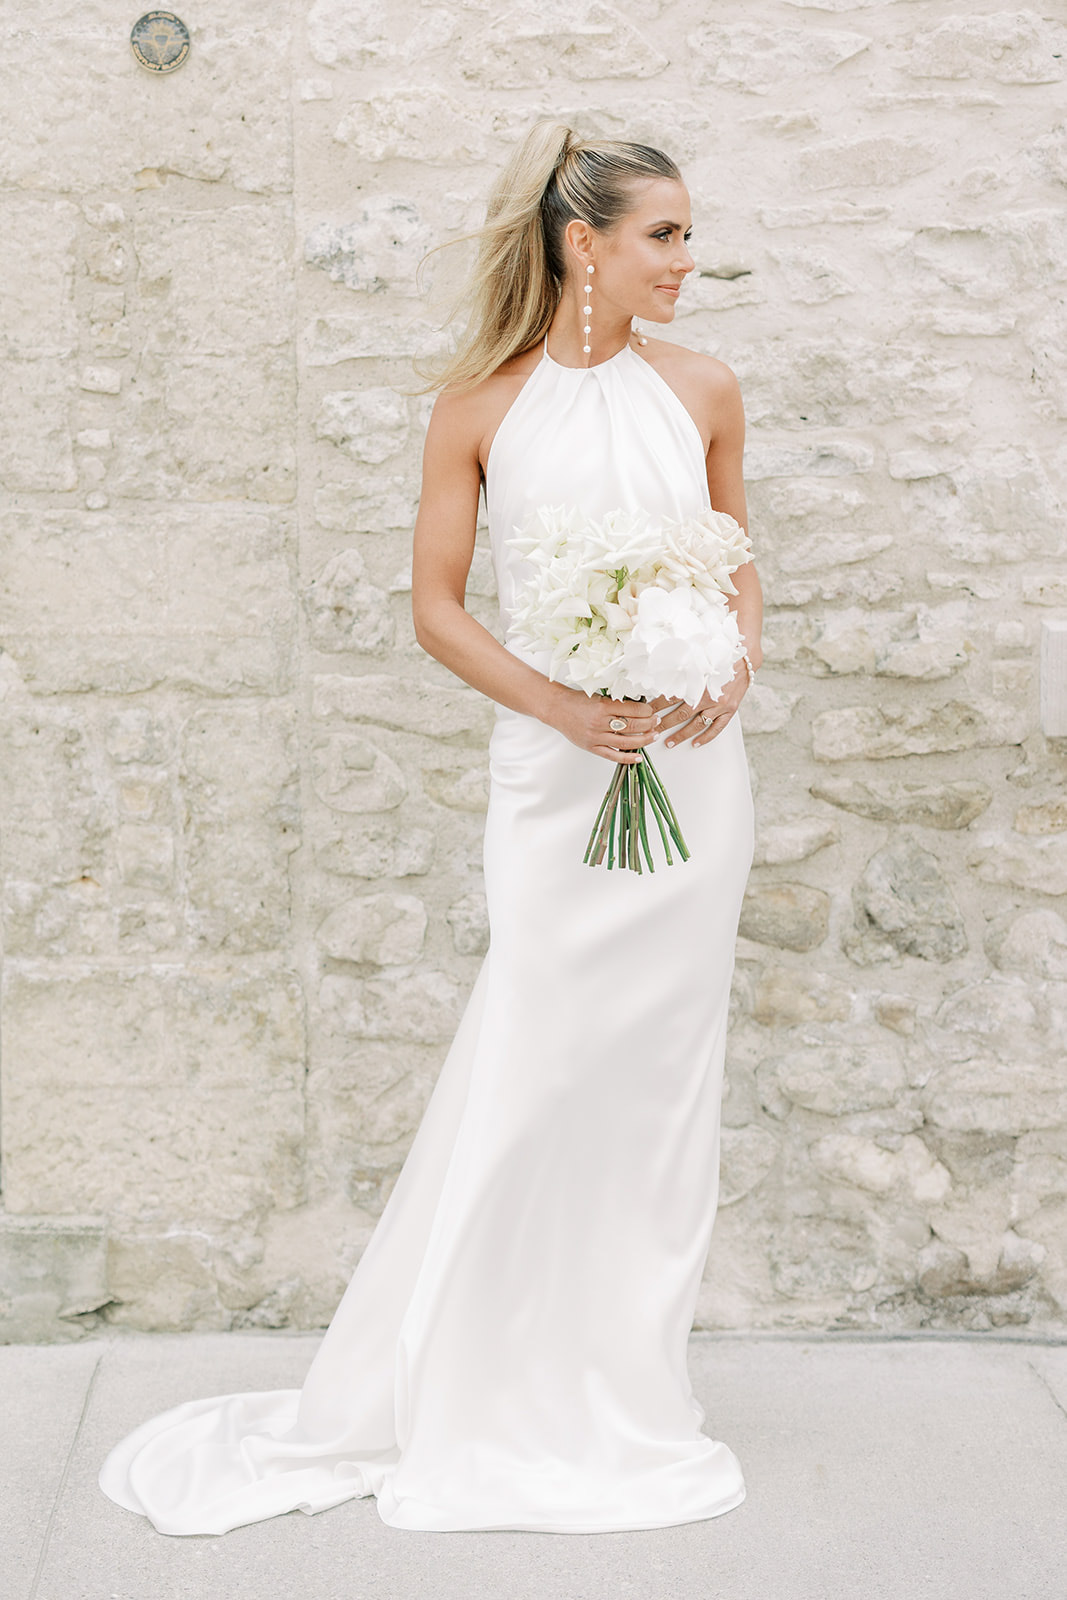 Bride standing with wedding bouquet in a modern wedding dress